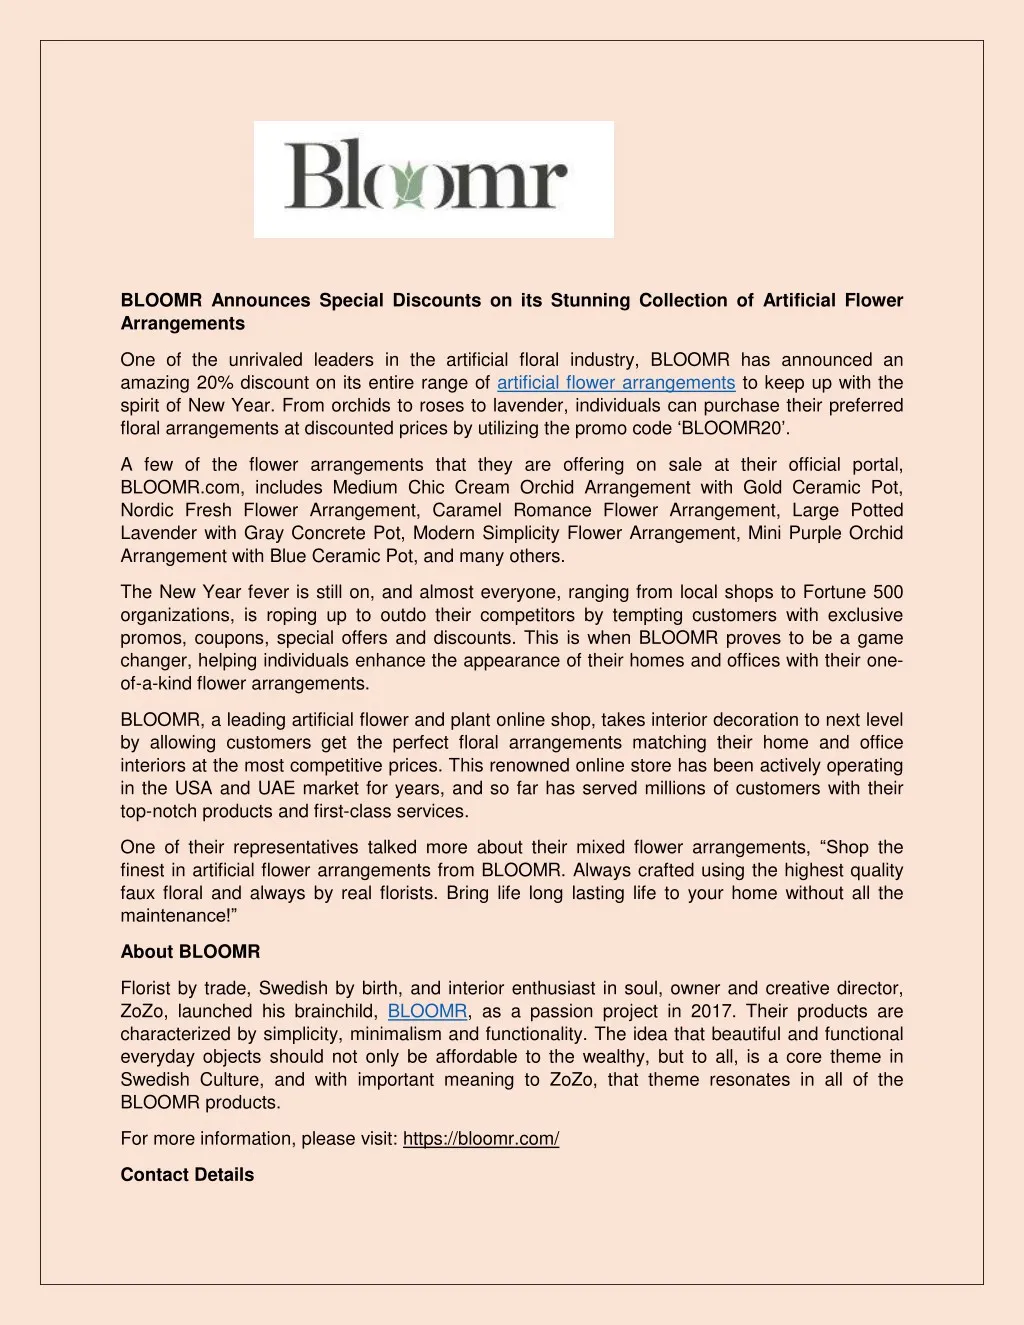 bloomr announces special discounts